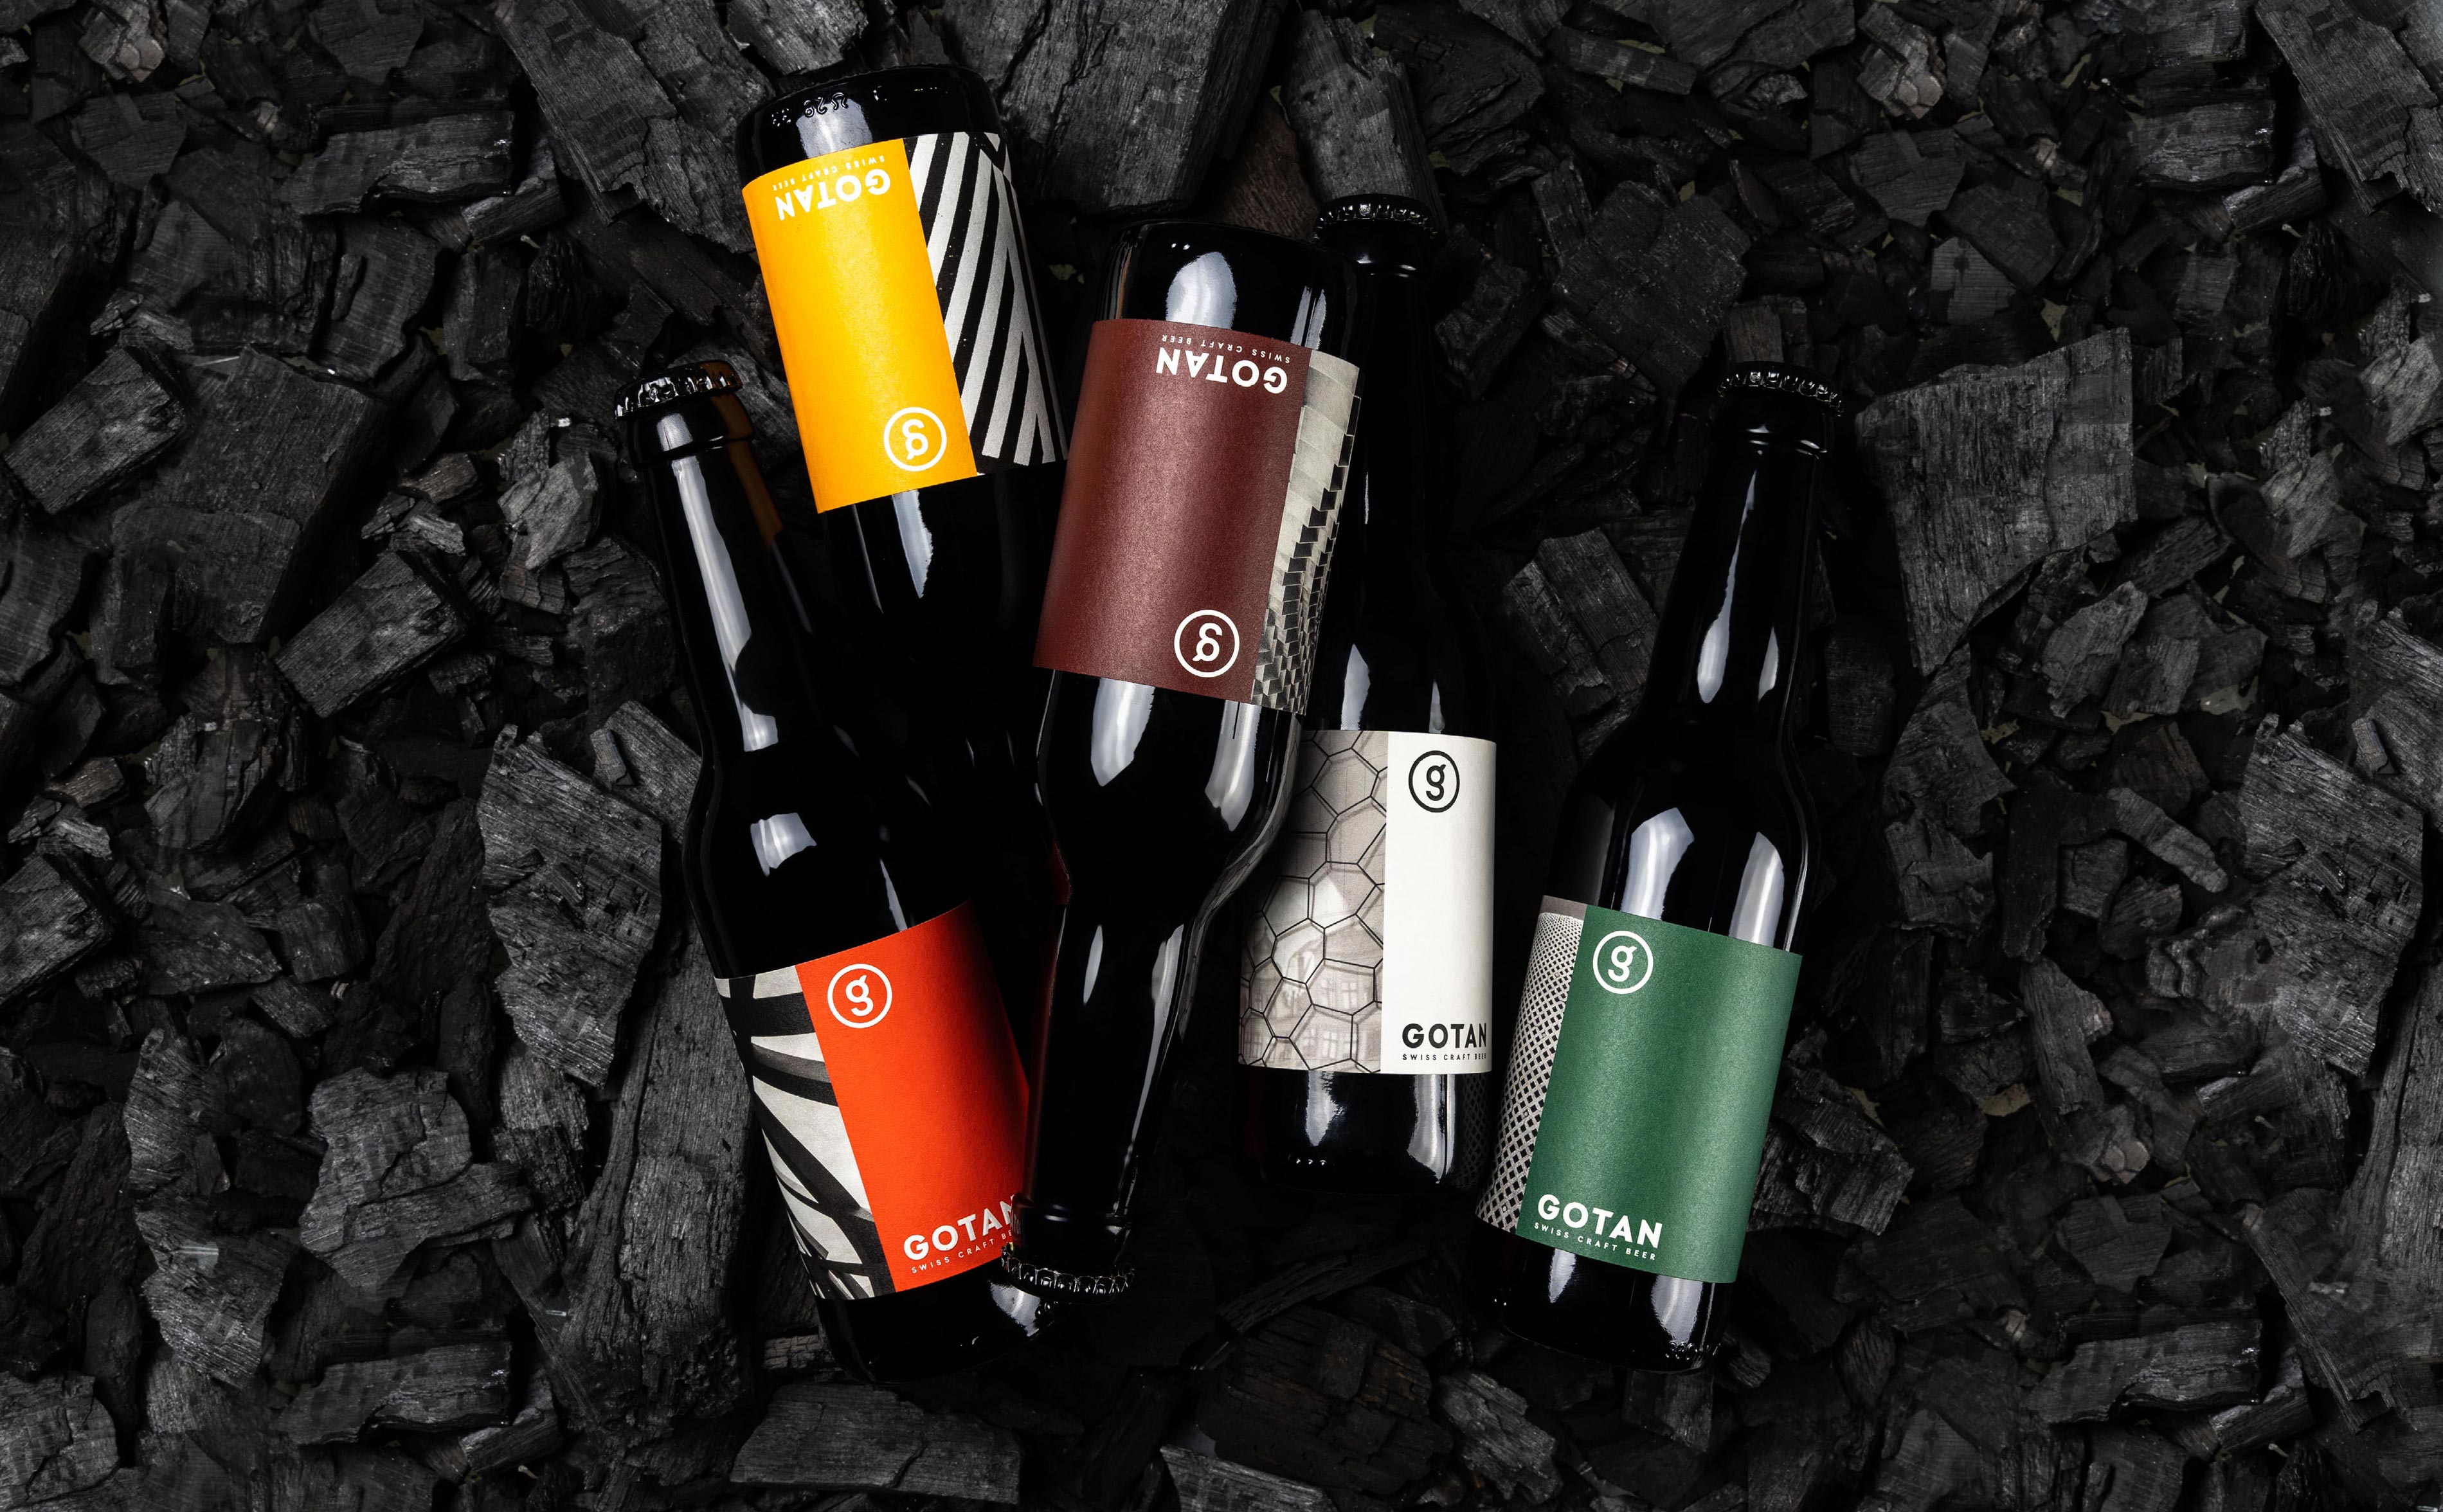 Gotan Swiss Artisanal Beer Packaging Design